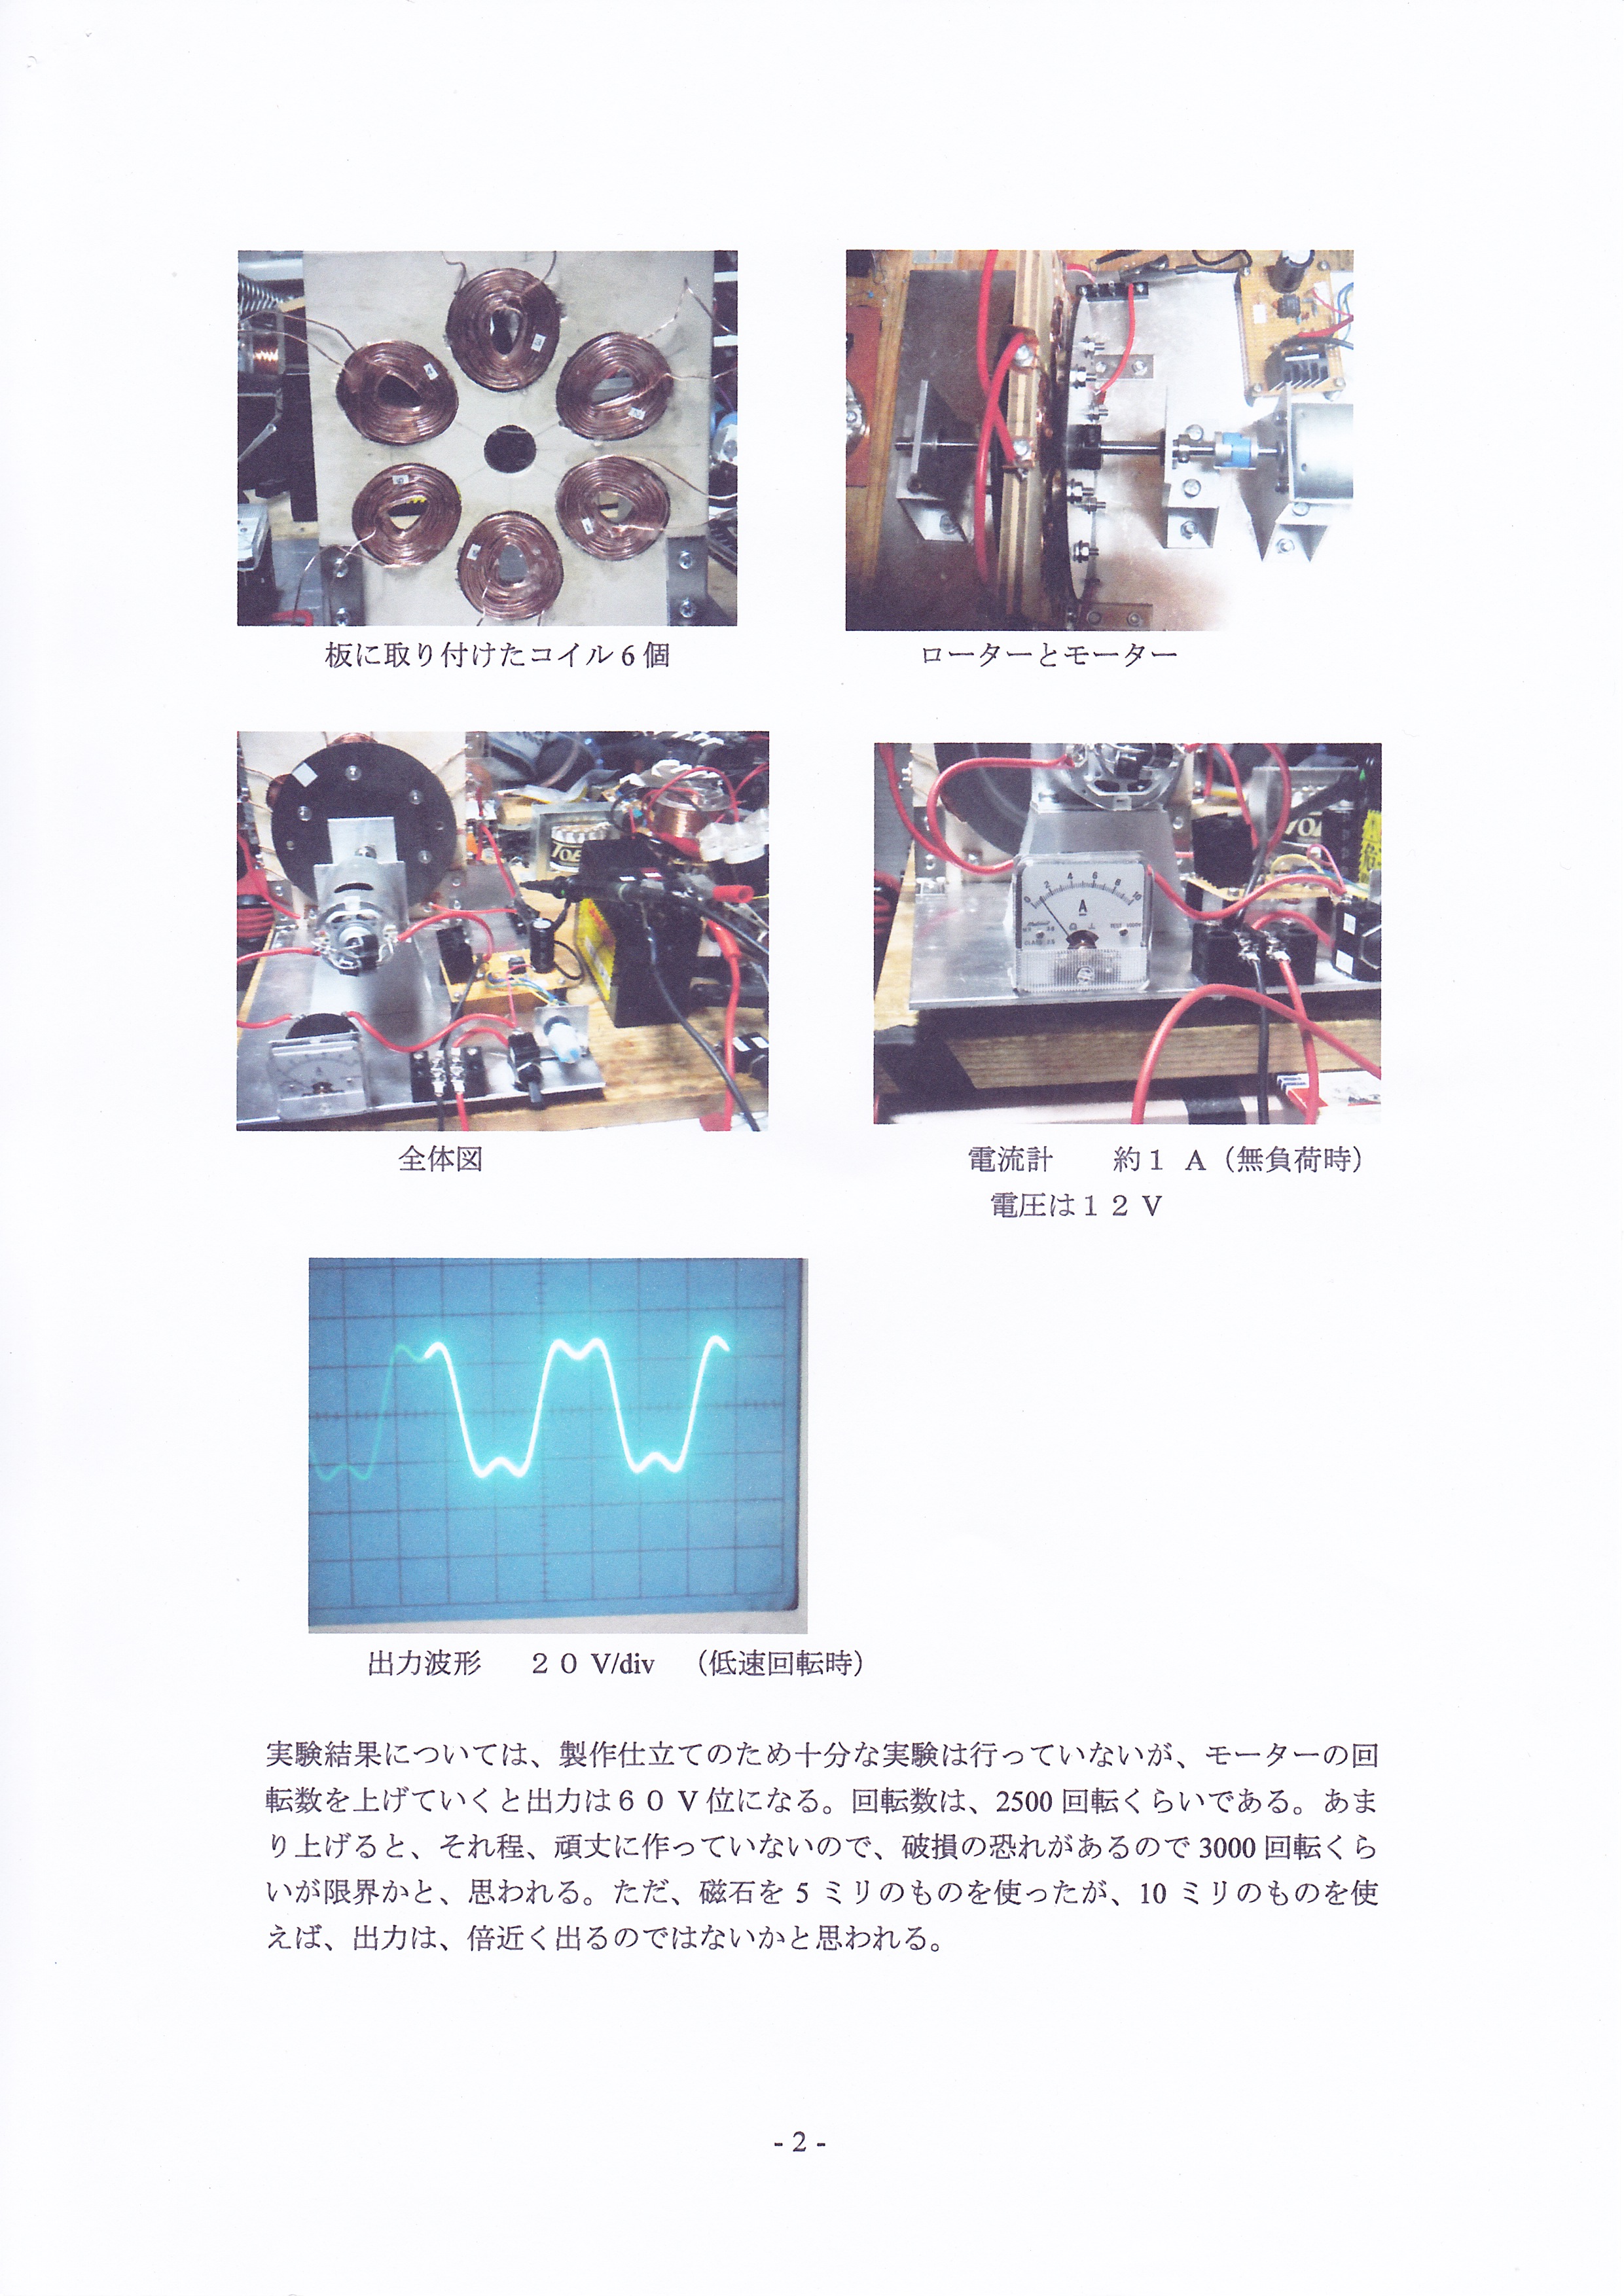 PWM制御モーターによる発電実験_0002